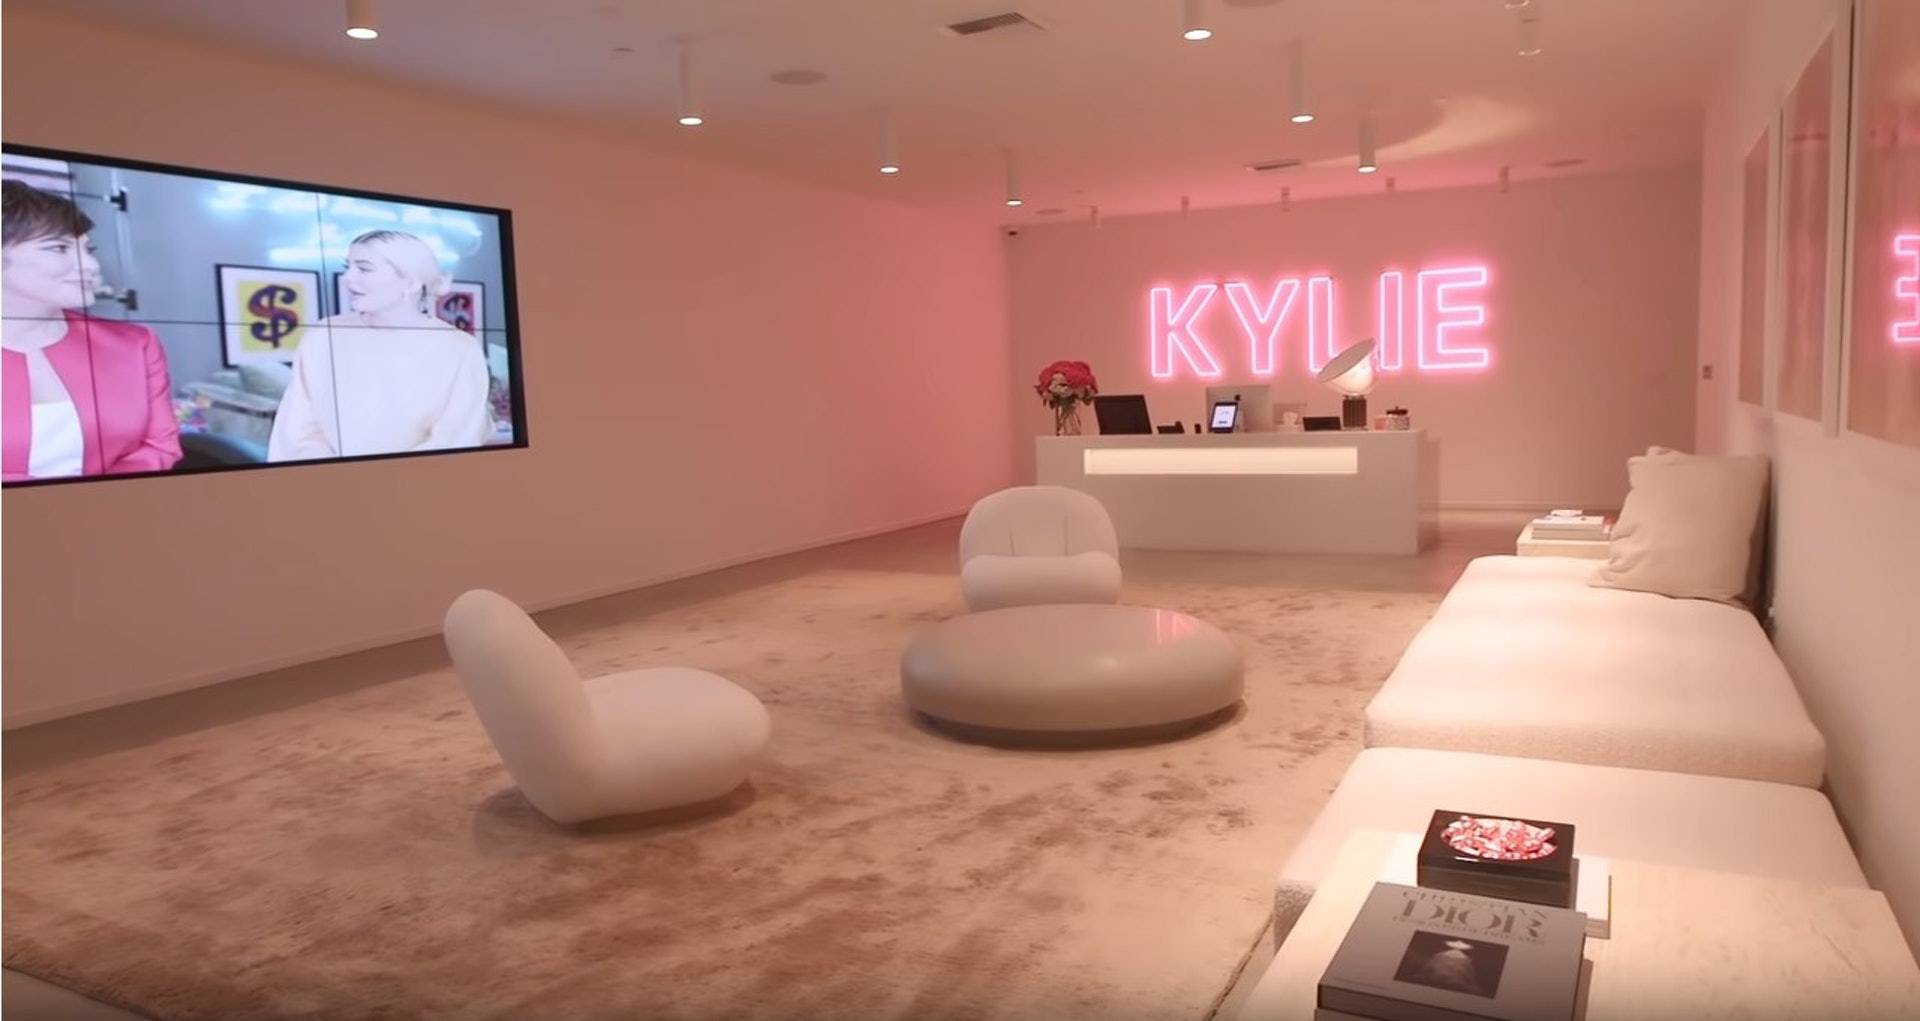 Kylie Jenner 's YouTube